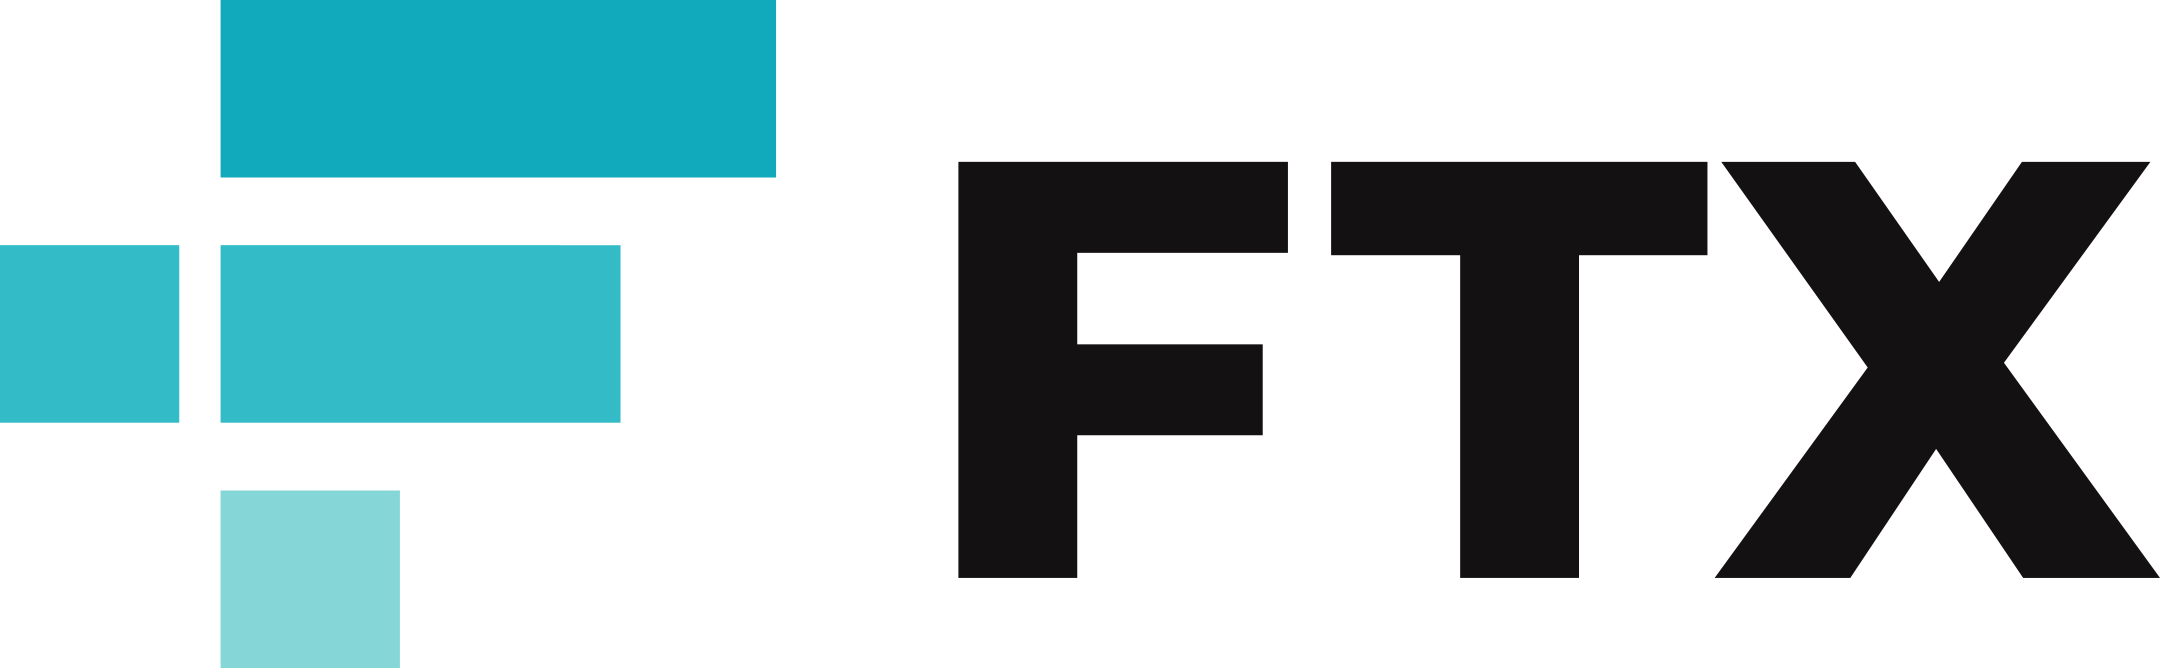 ftx logo 1 - FTX Trading Logo